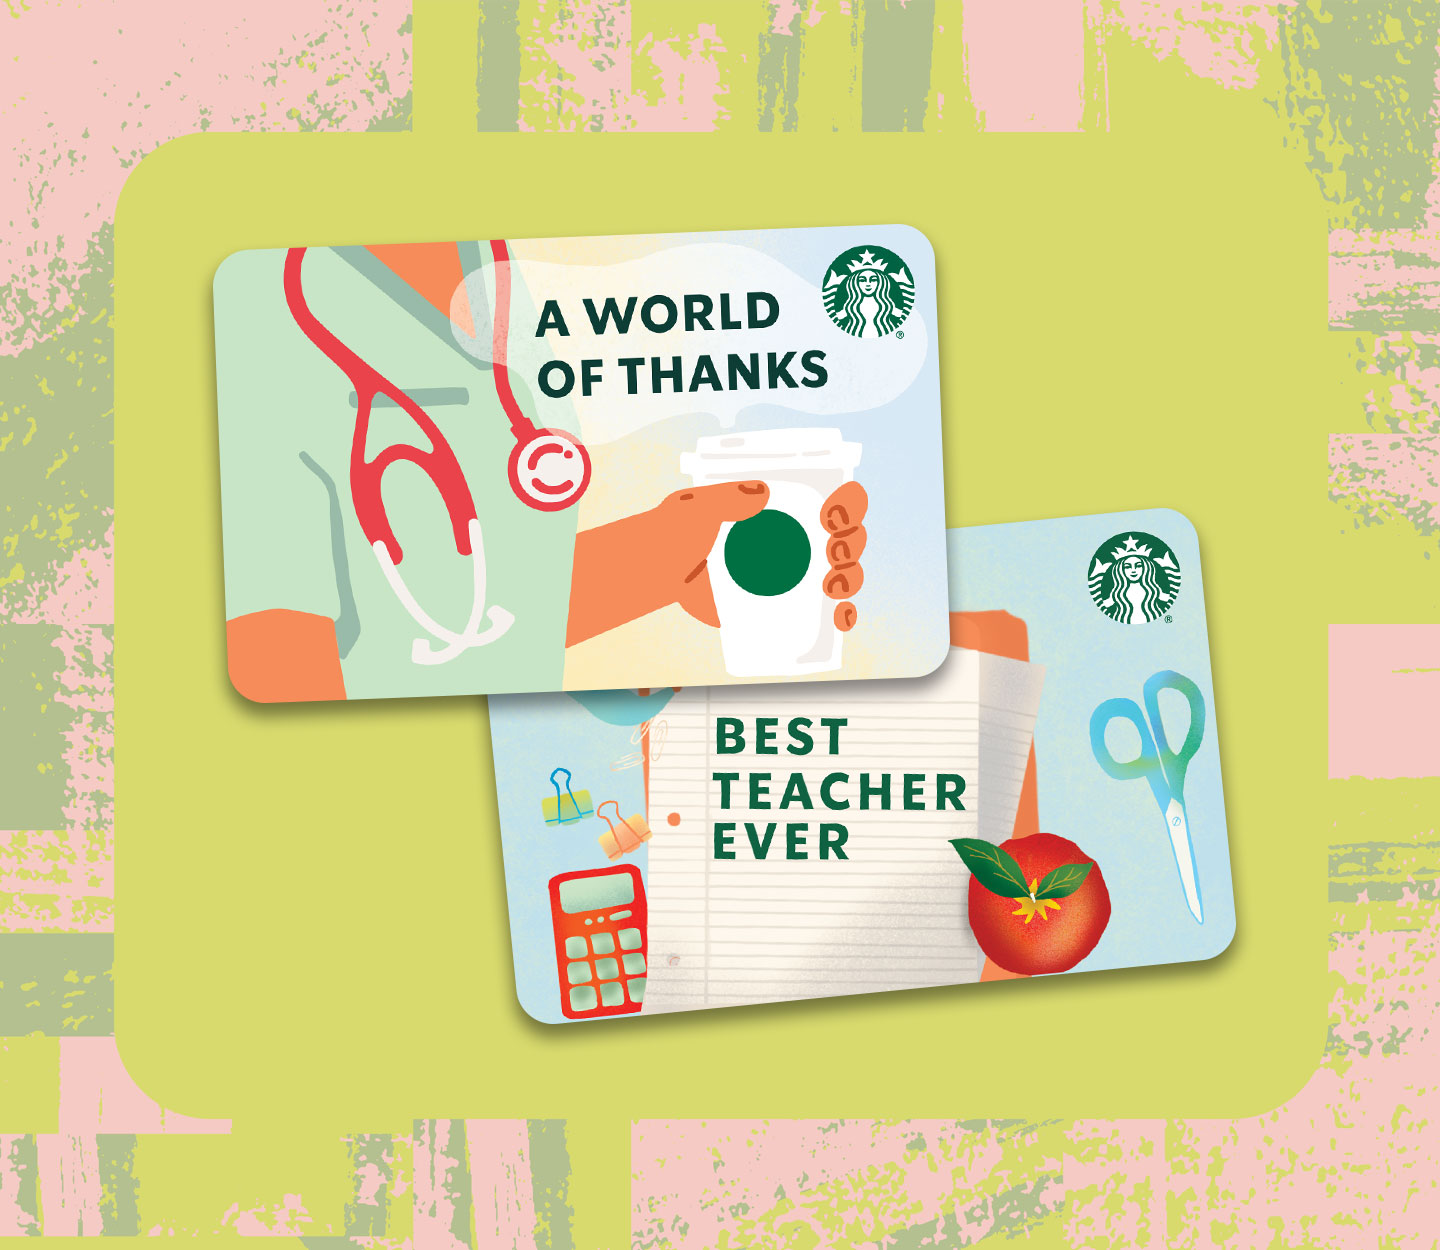 Nurse-themed gift card that reads A WORLD OF THANKS and a teacher-themed gift card that reads BEST TEACHER EVER.